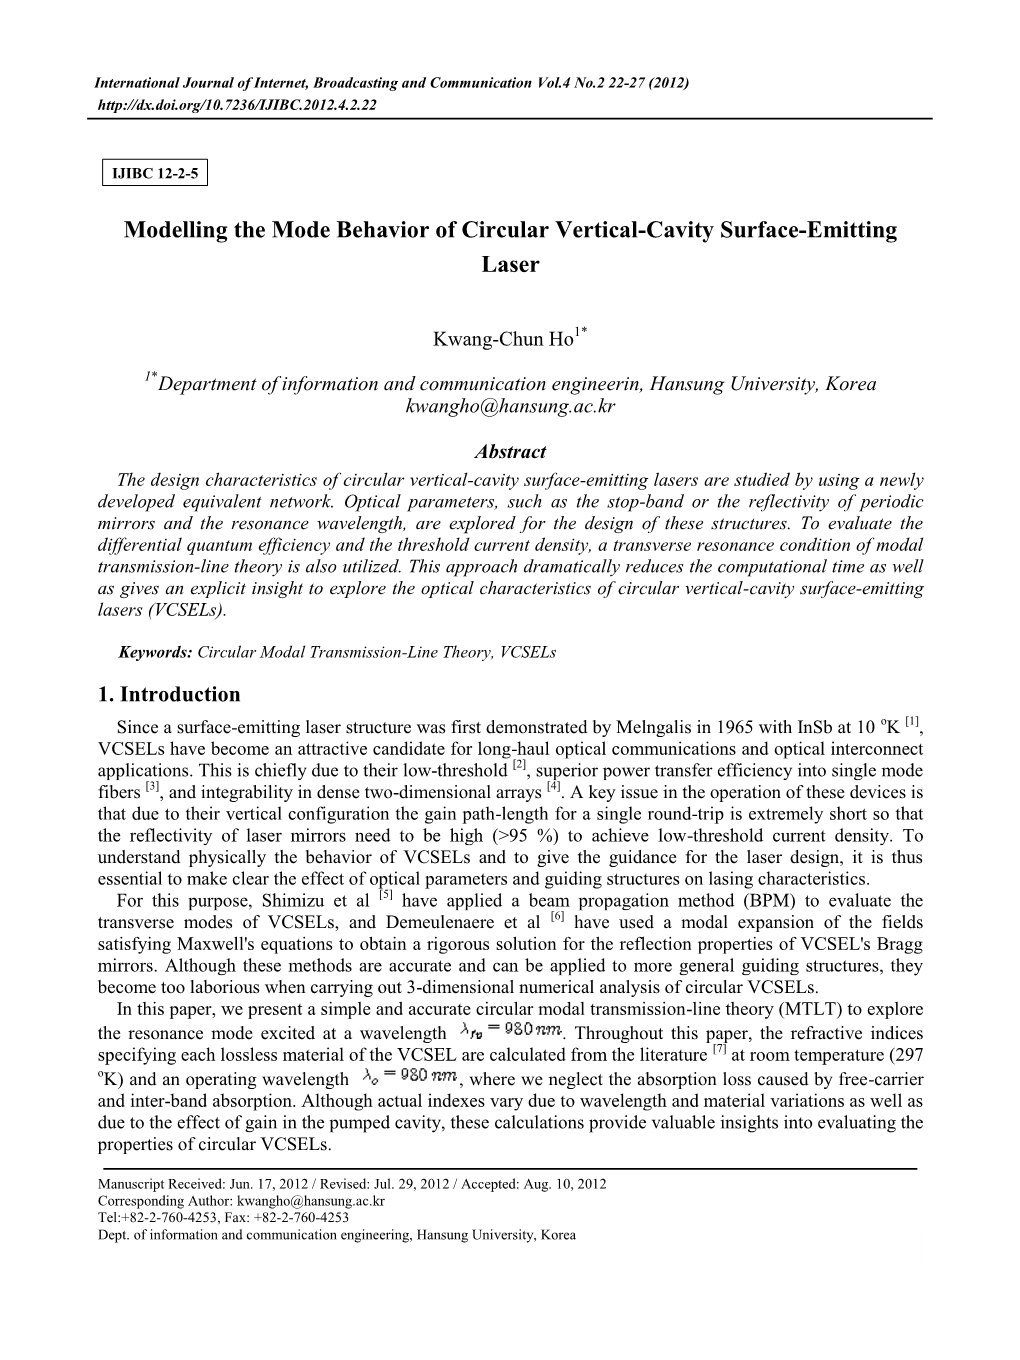 Modelling the Mode Behavior of Circular Vertical-Cavity Surface-Emitting Laser